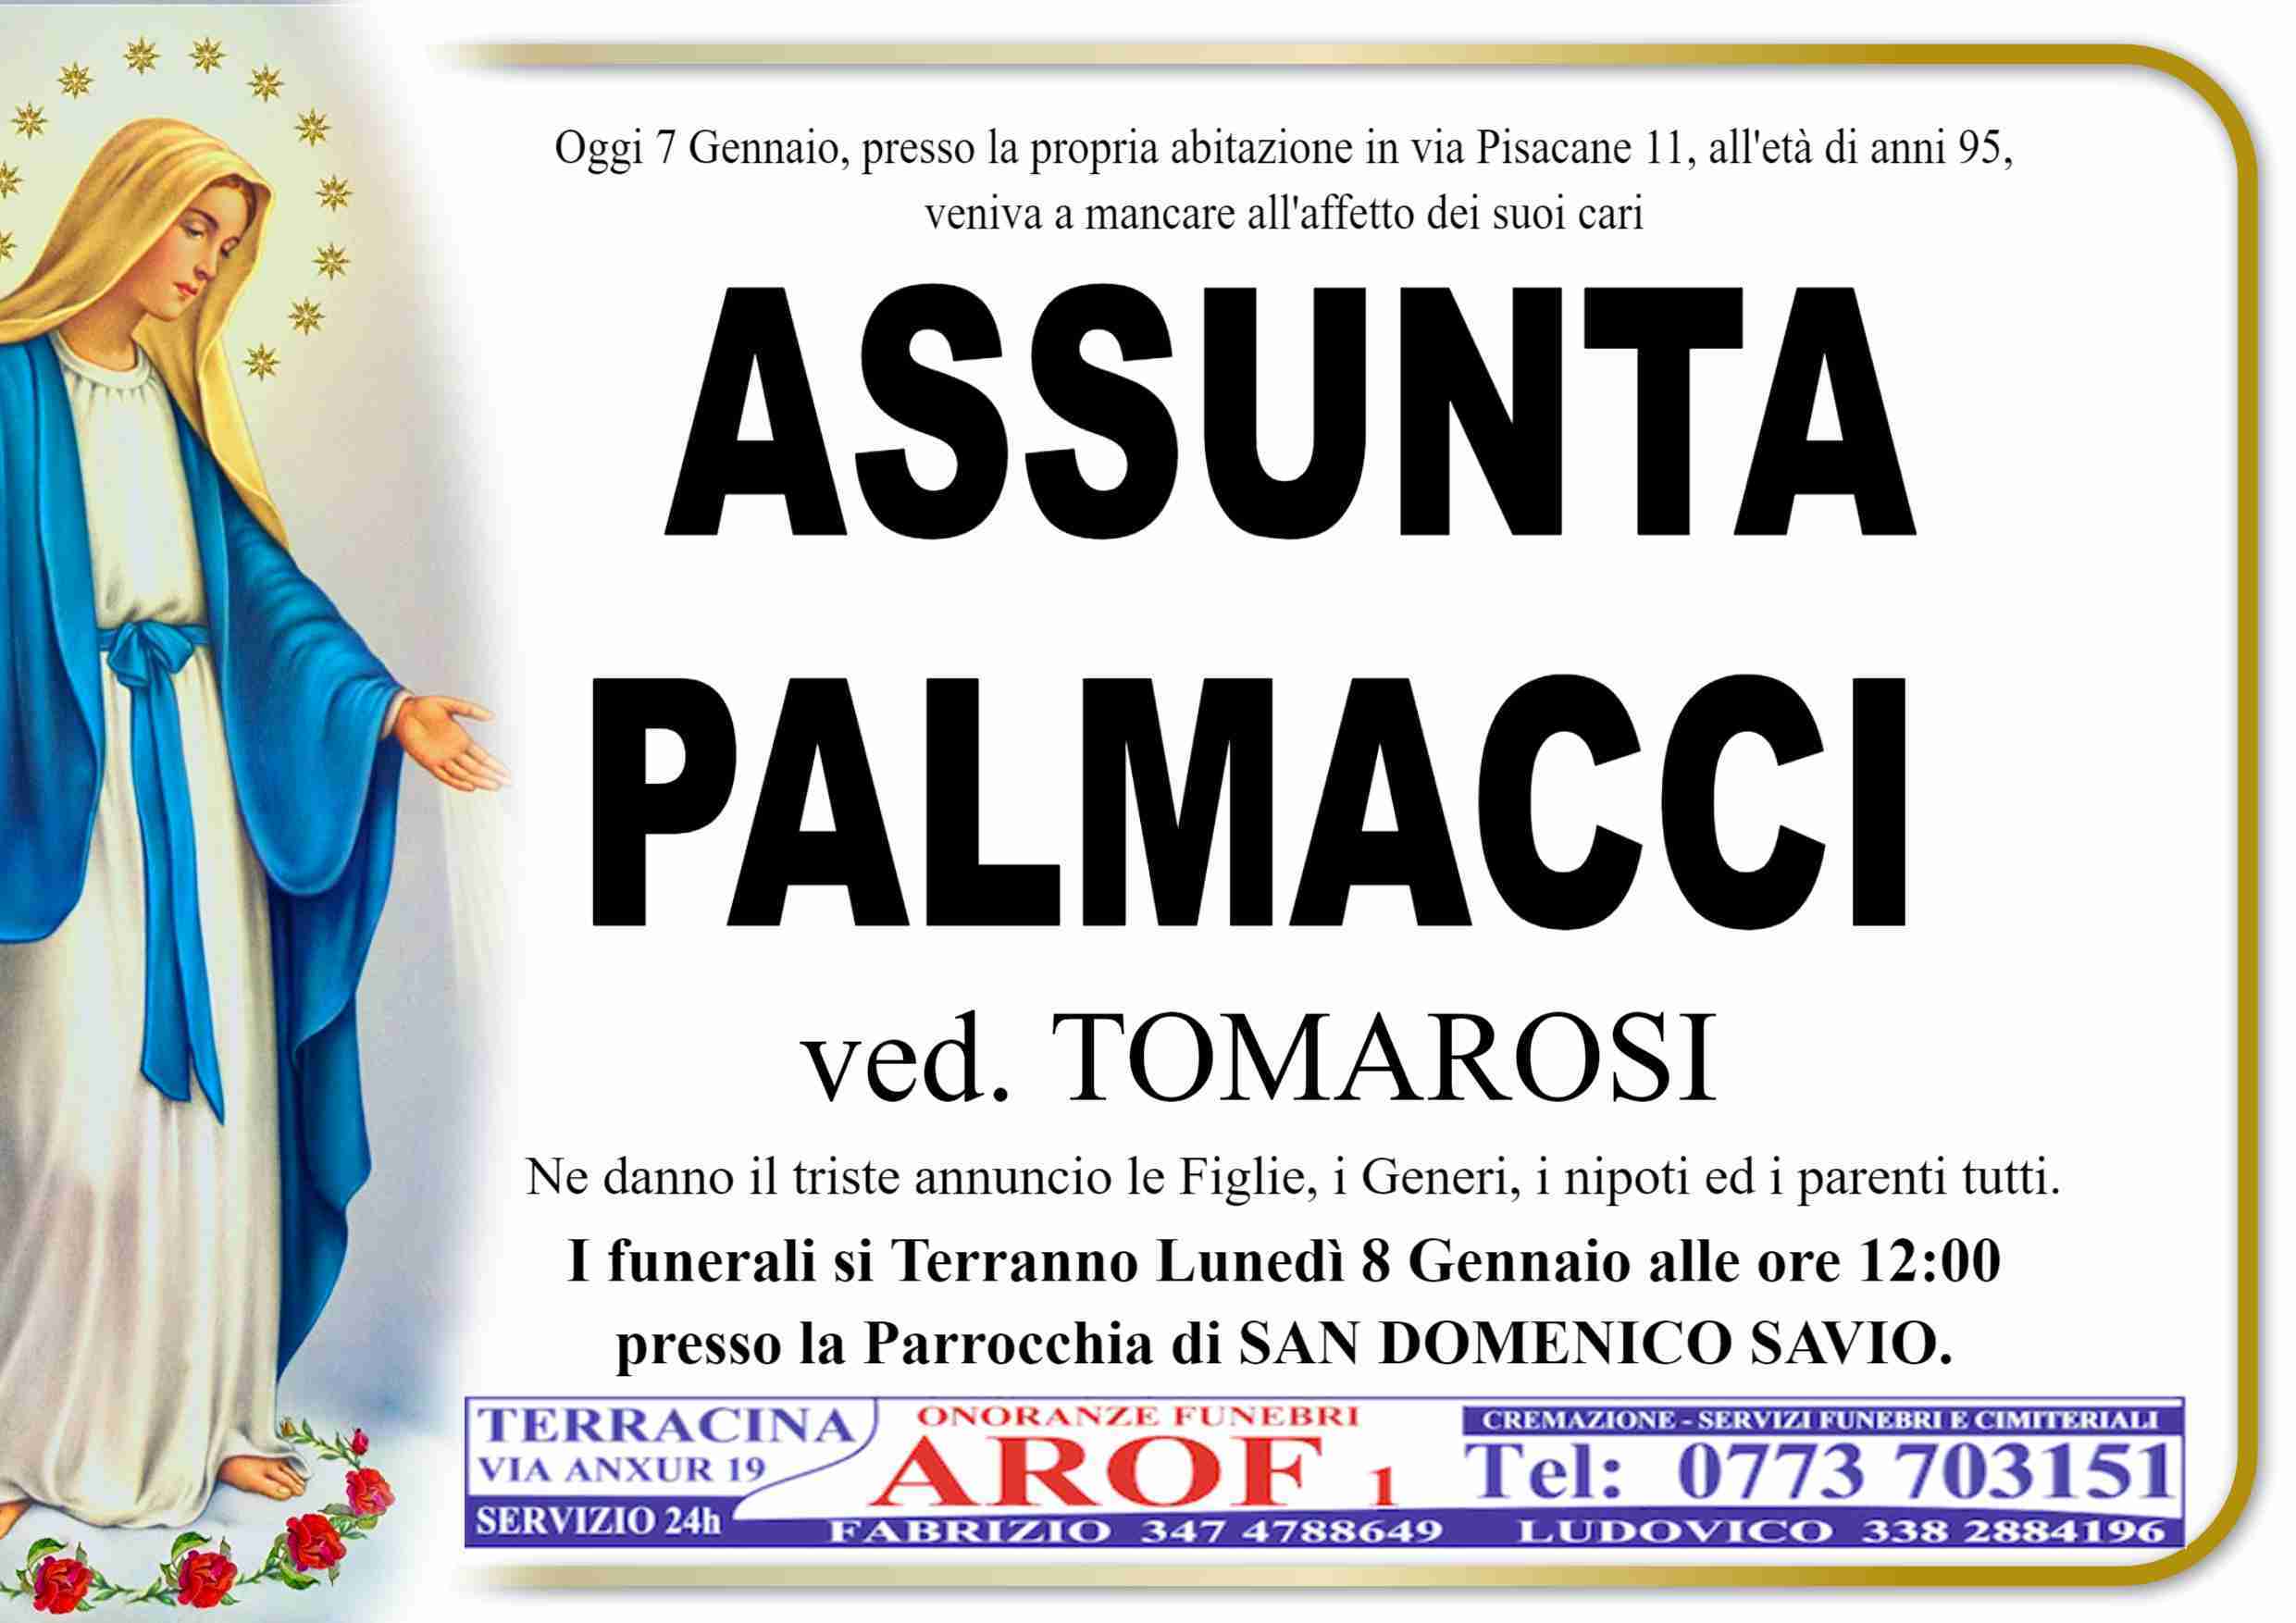 Assunta Palmacci